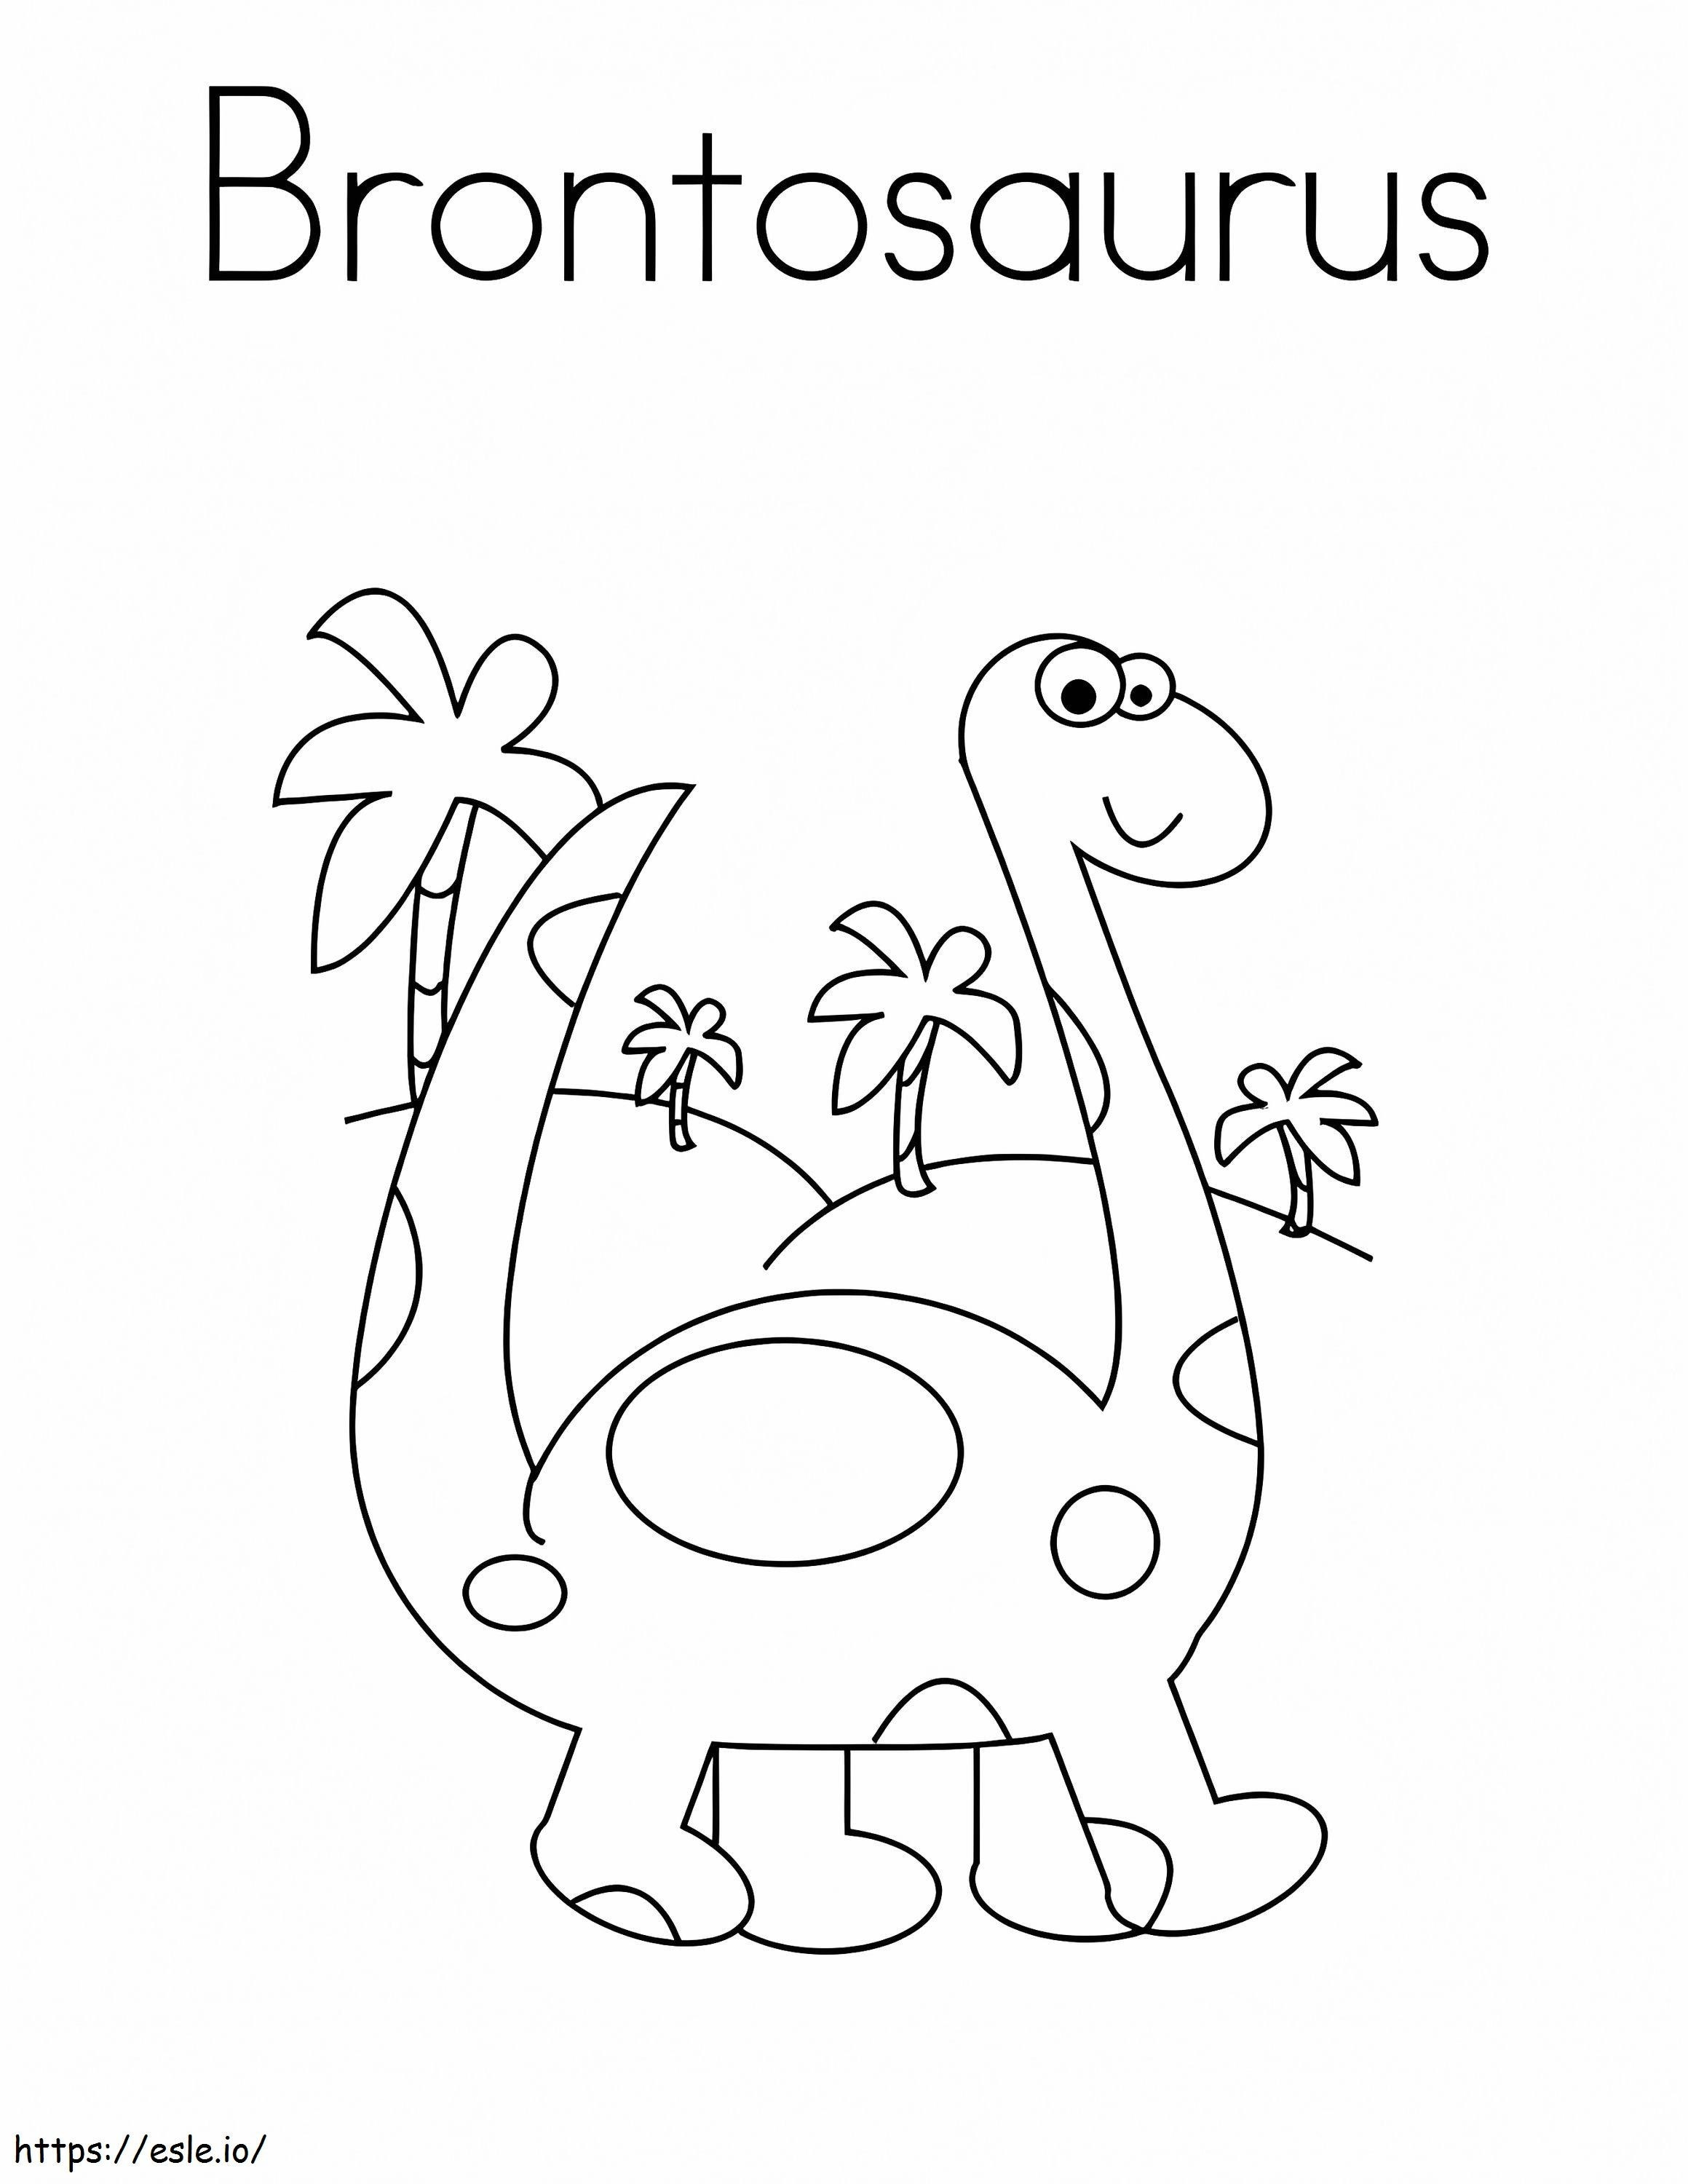 Baby Brontosaurus coloring page